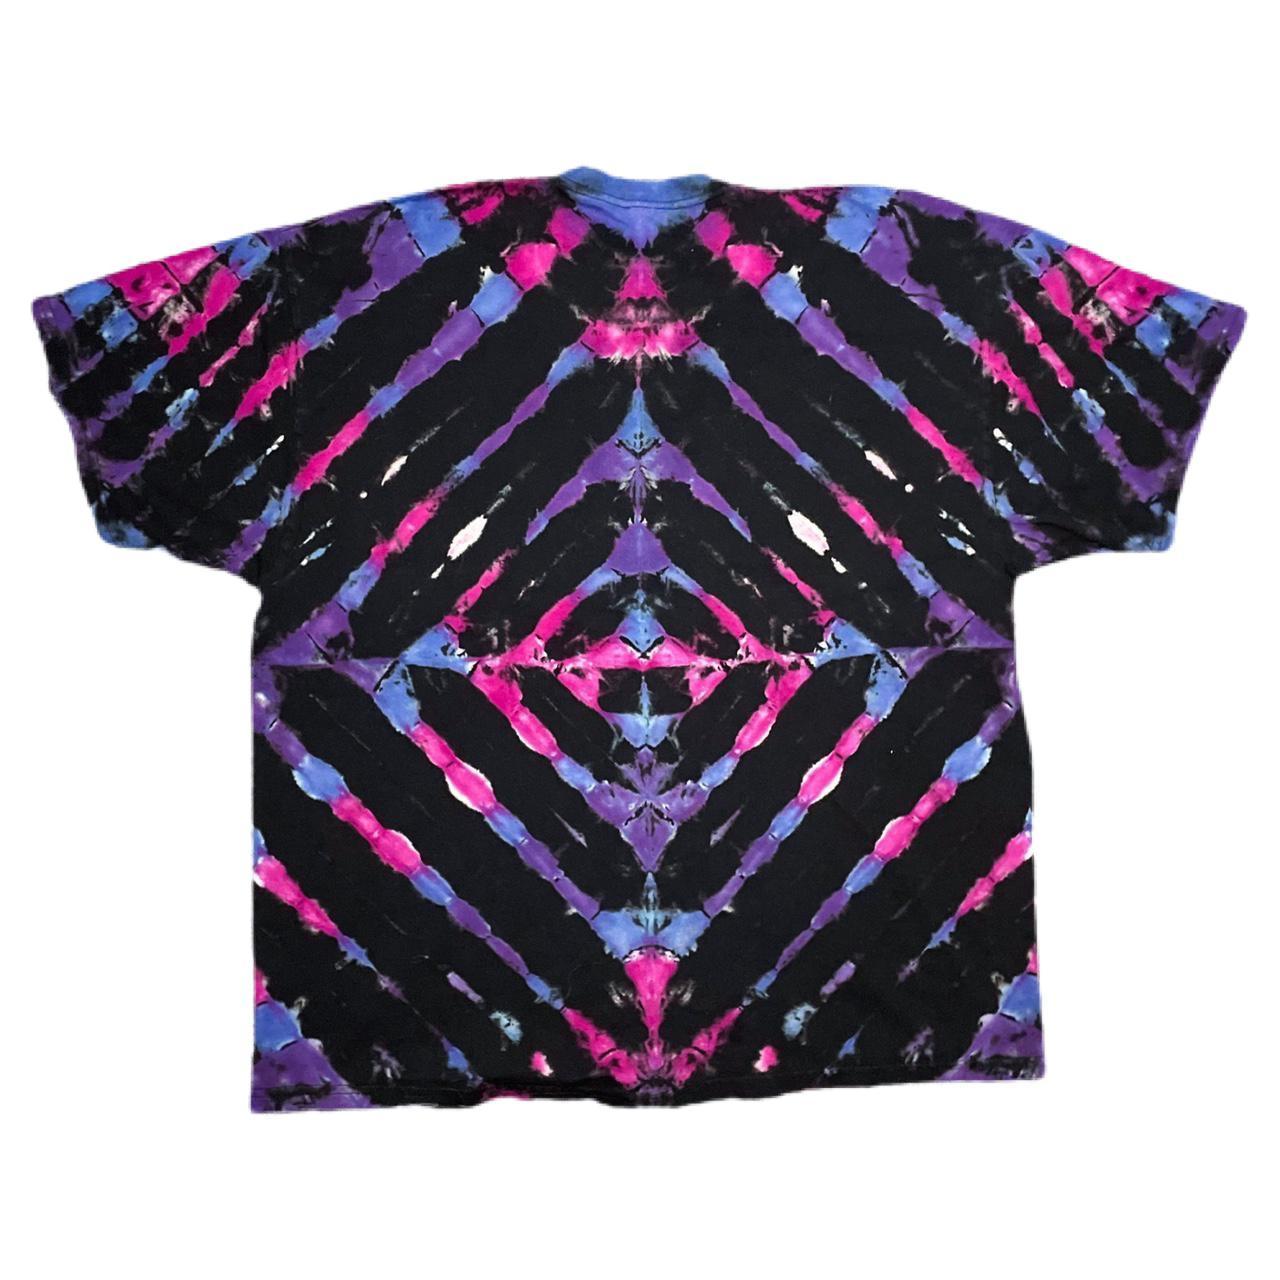 Product Image 2 - Y2K Tie-Dye T-shirt

- Size L
-